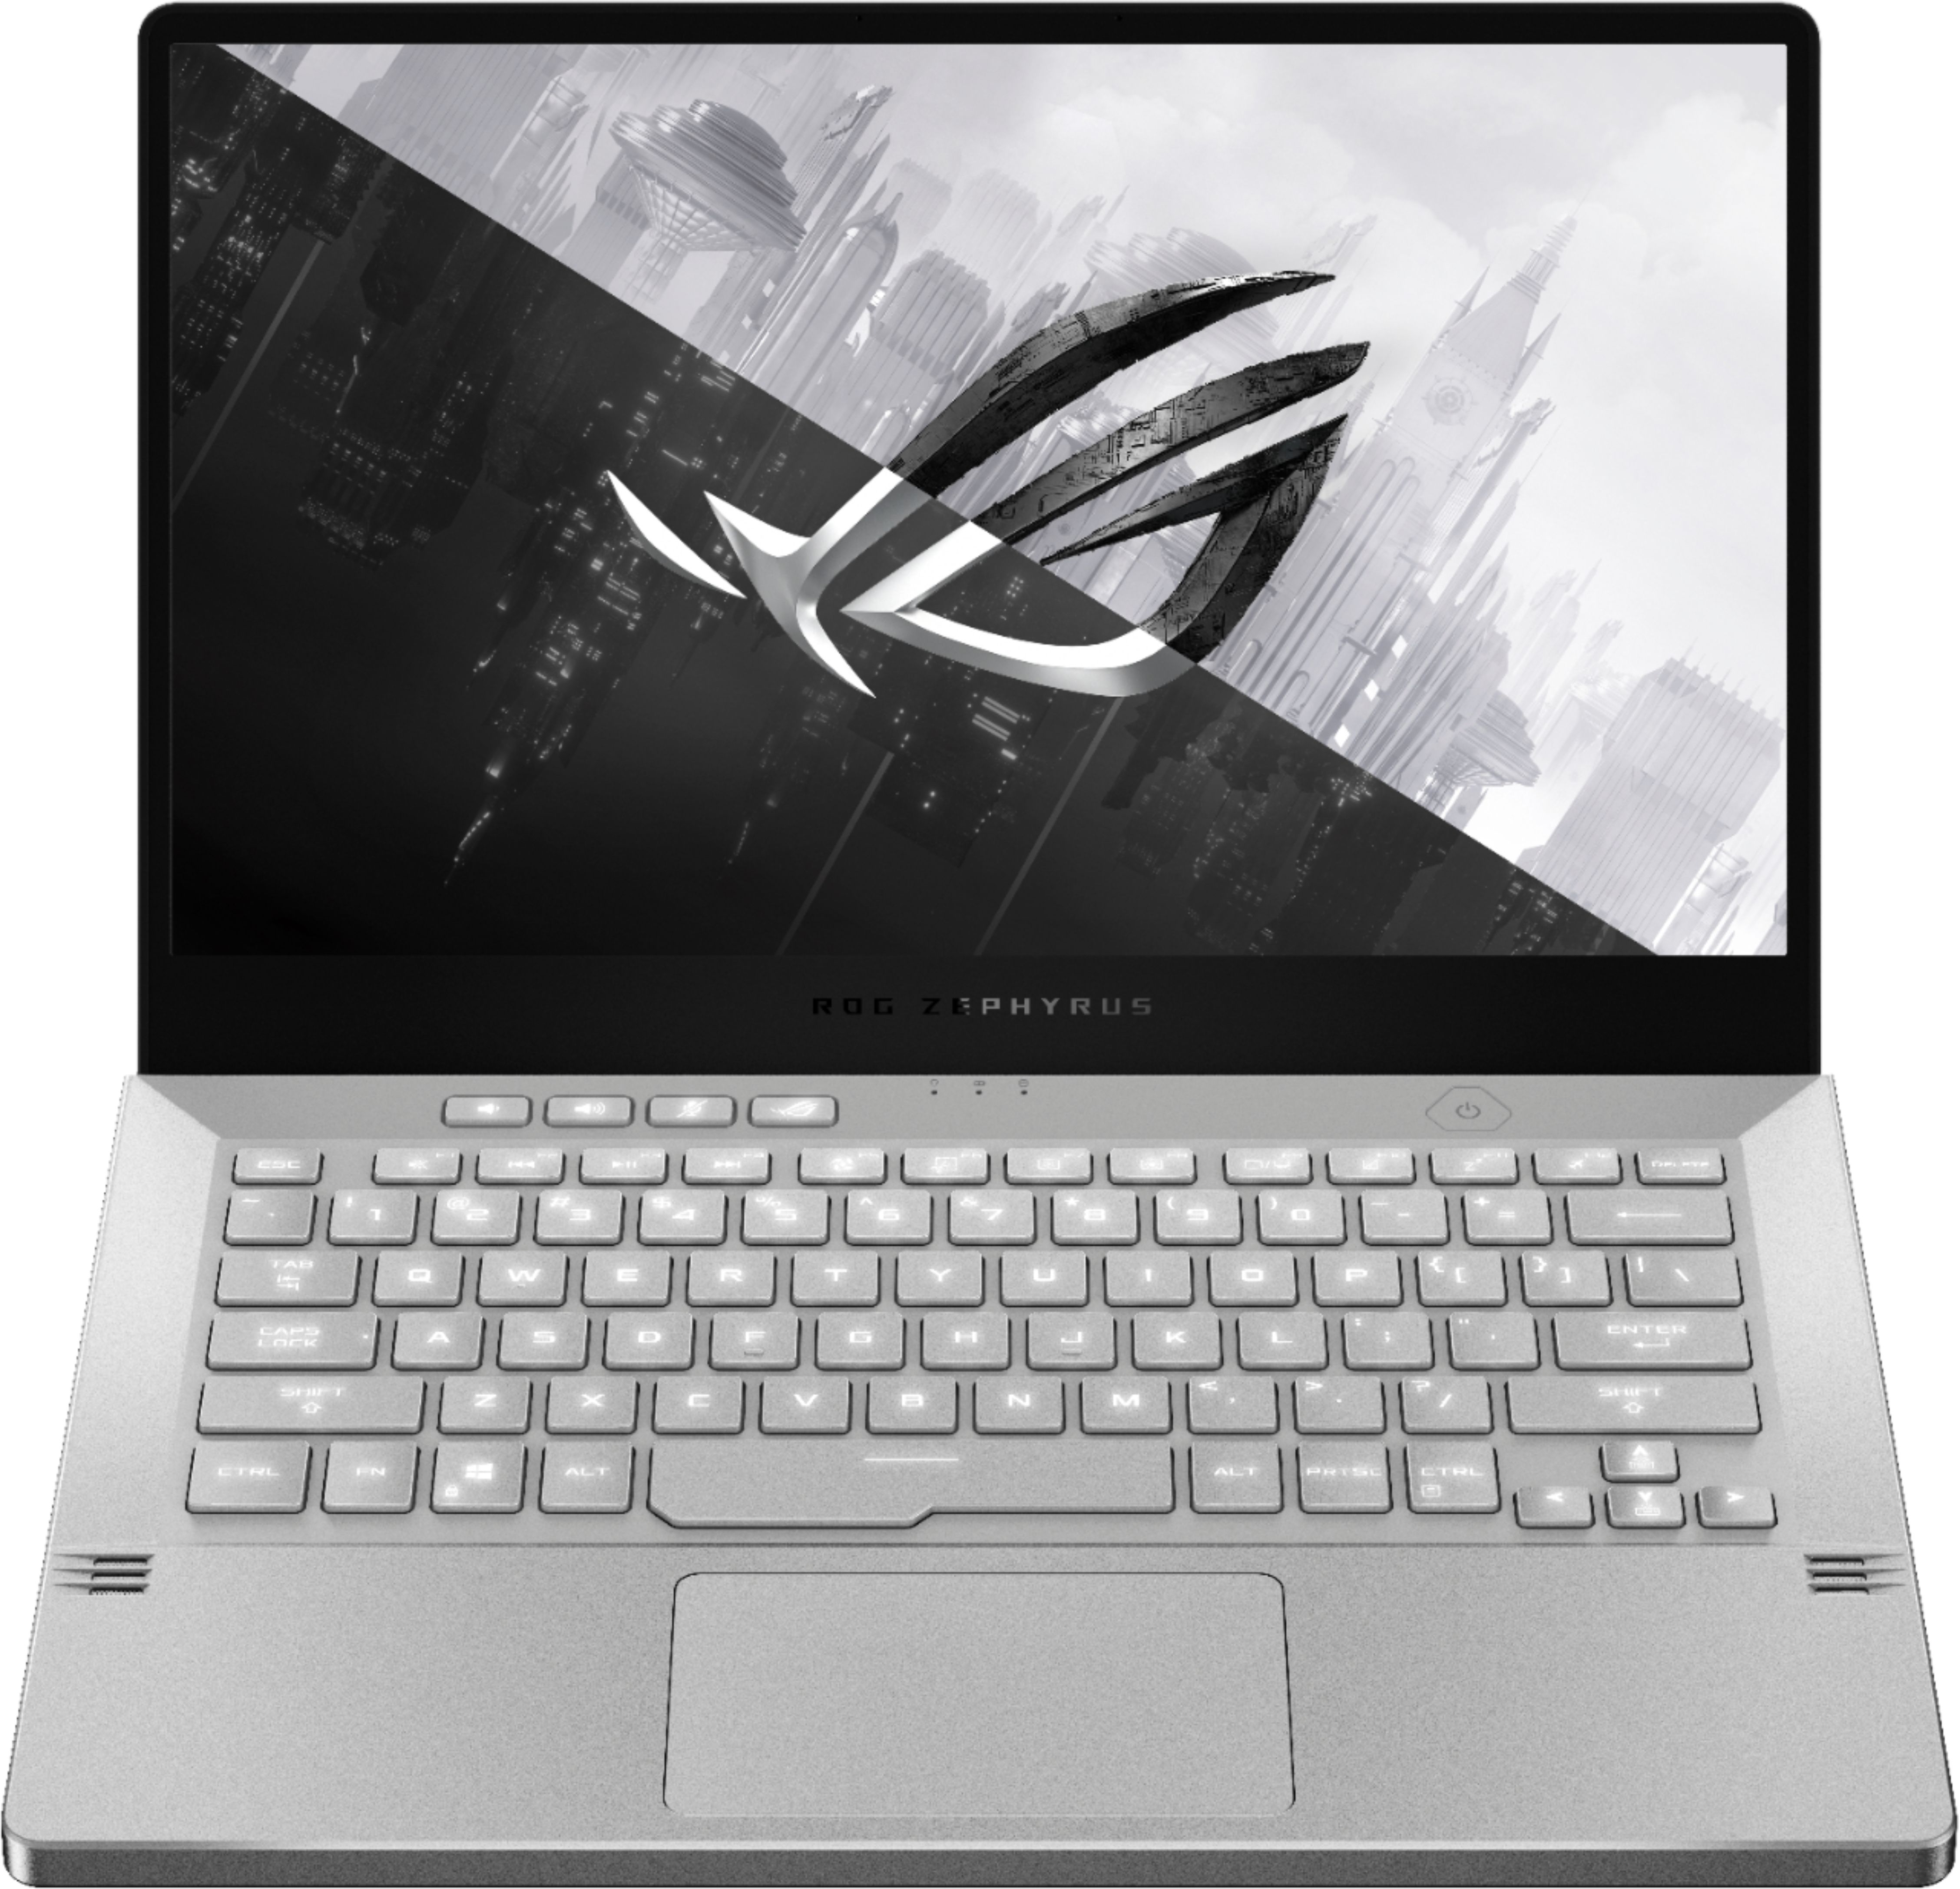 Asus Rog Zephyrus G14 14 Gaming Laptop Amd Ryzen 9 16gb Memory Nvidia Geforce Rtx 60 Max Q 1tb Ssd Moonlight White Ga401iv Br9n6 Best Buy